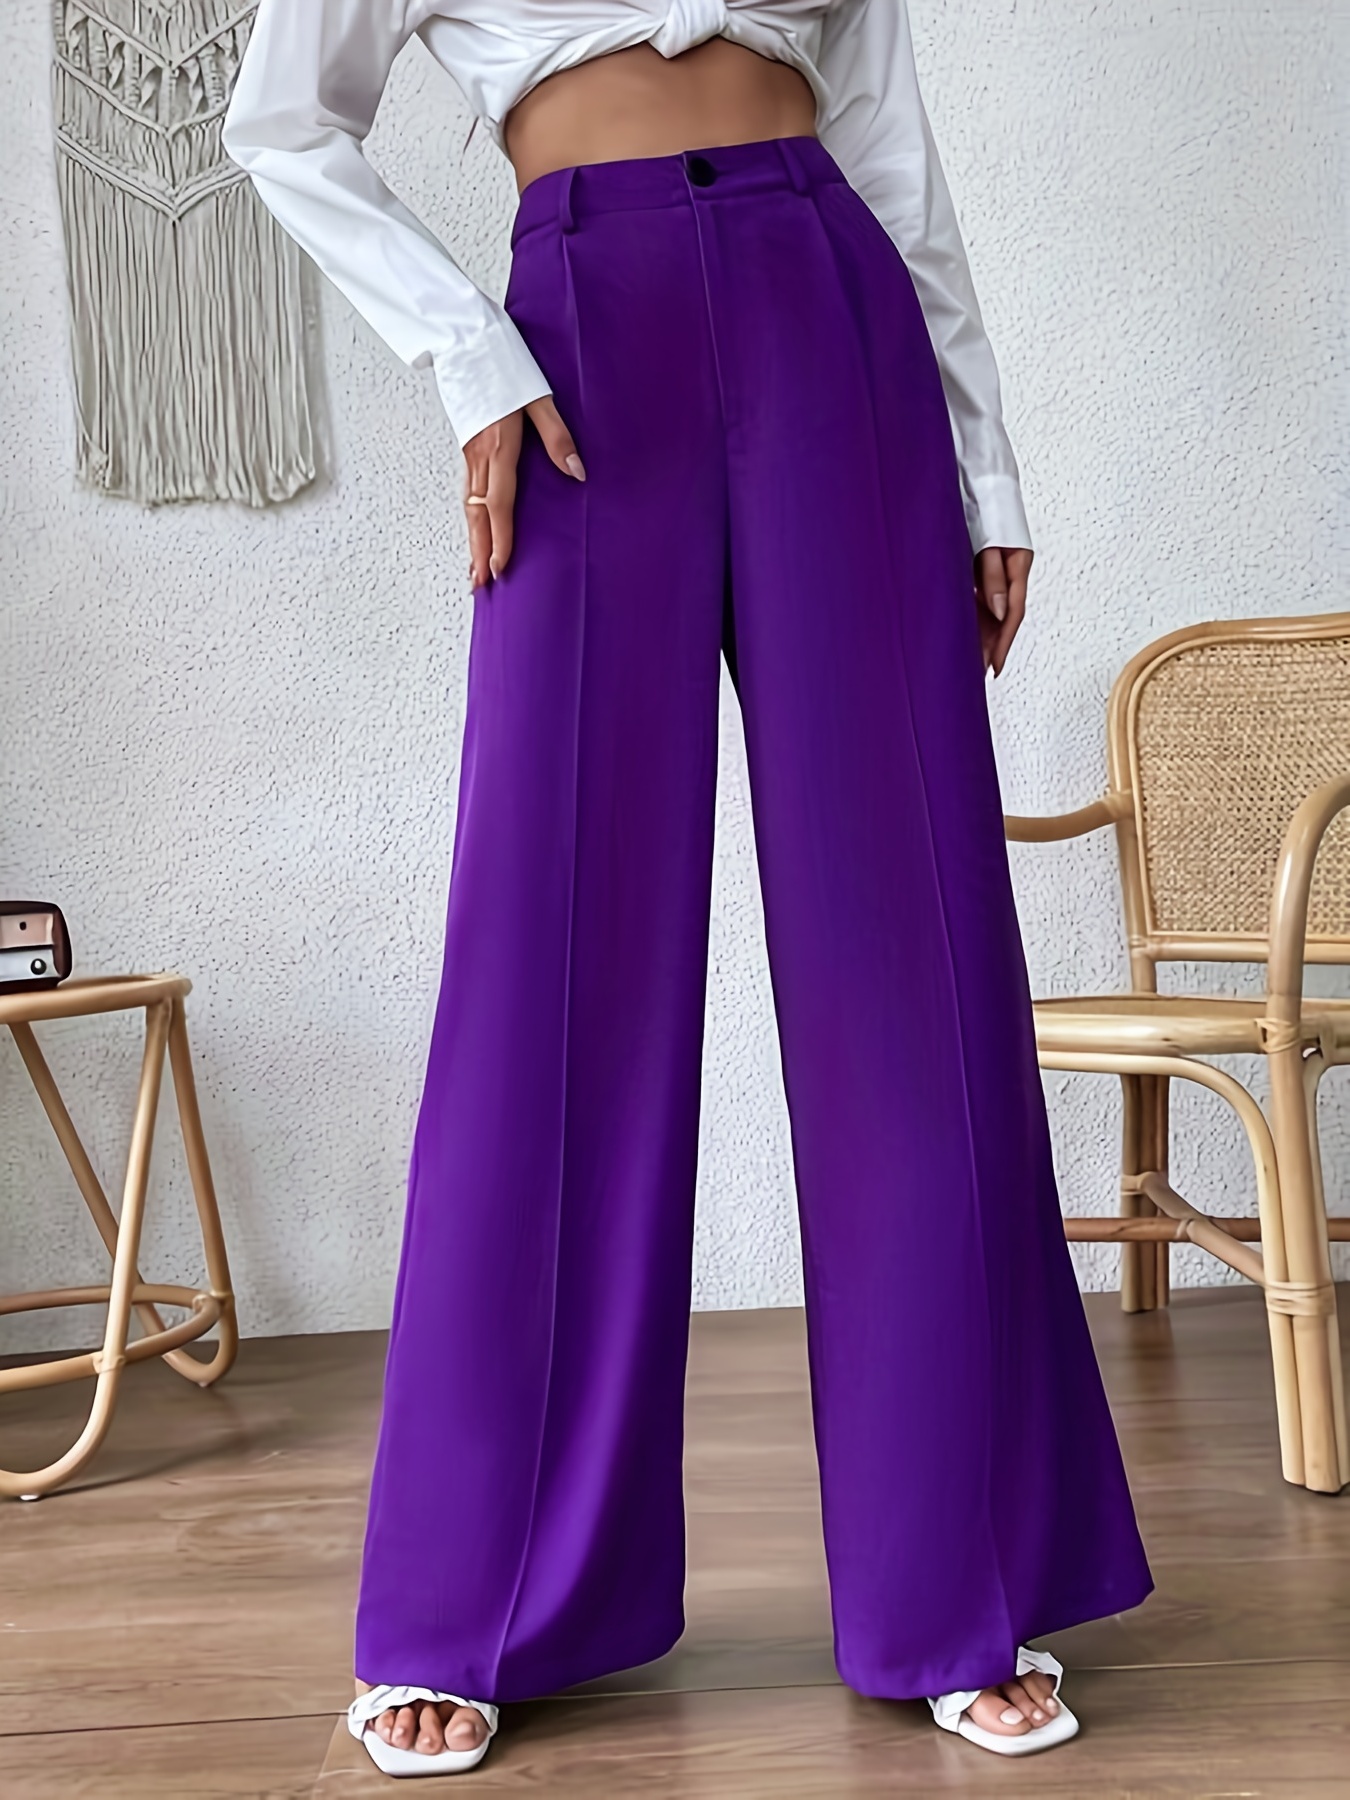 Long Pants For Women Women's Spring Purple Casual Elastic High Waist Flared Pants  Trousers Purple M JE 